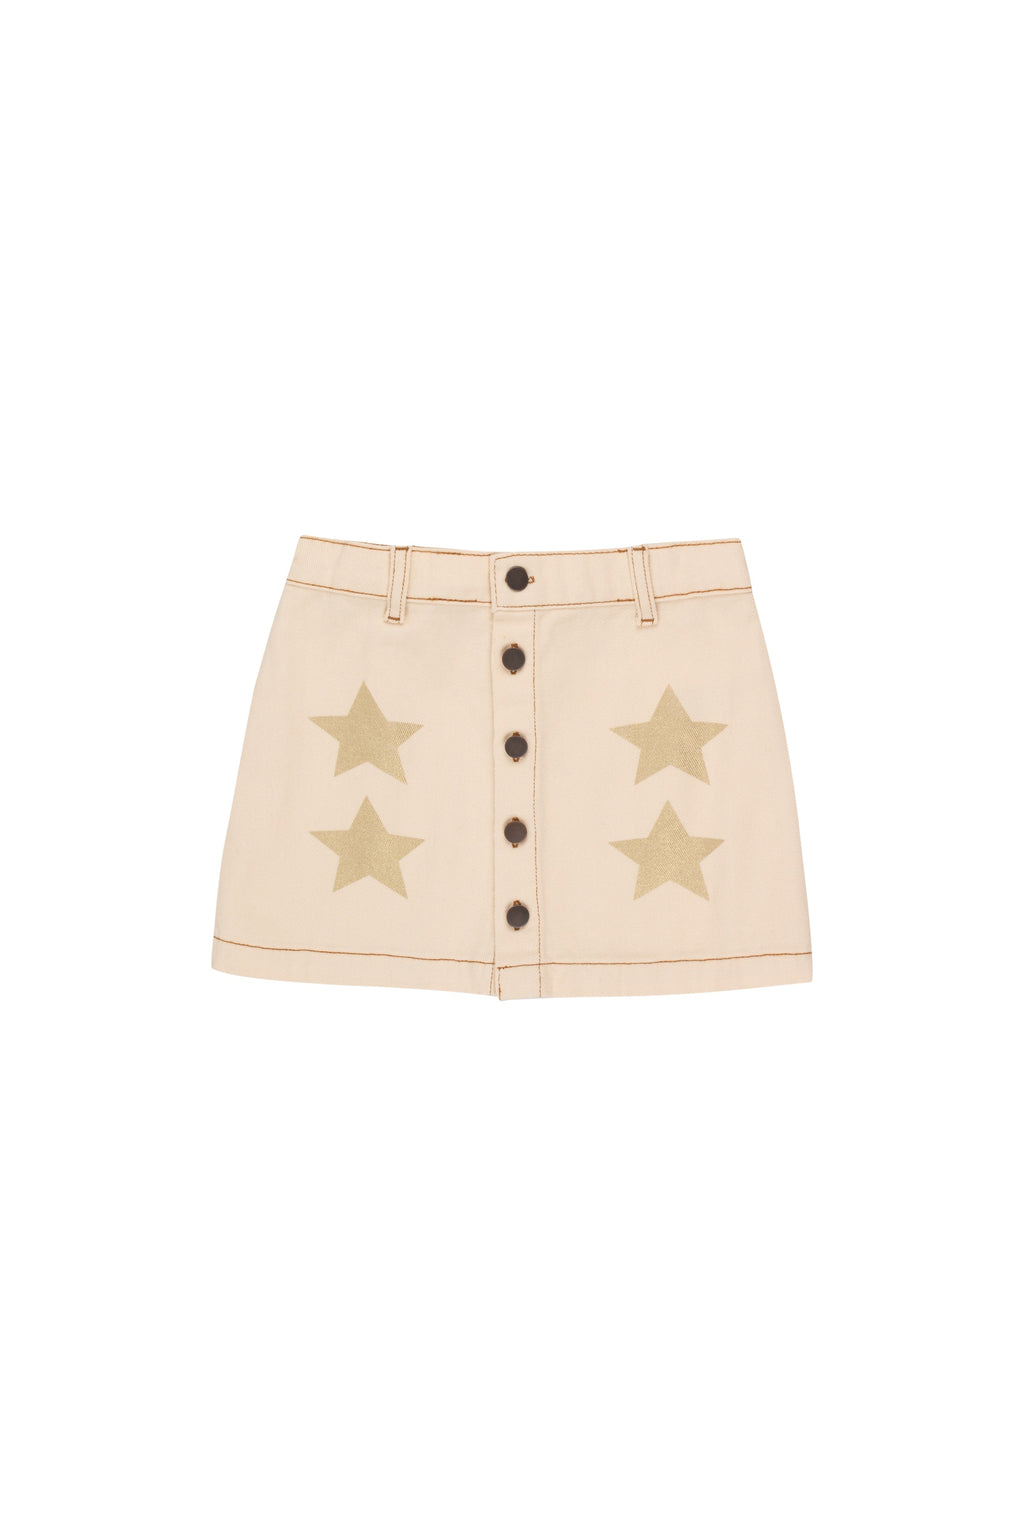 Tiny Cottons Stars Skirt - Light Cream